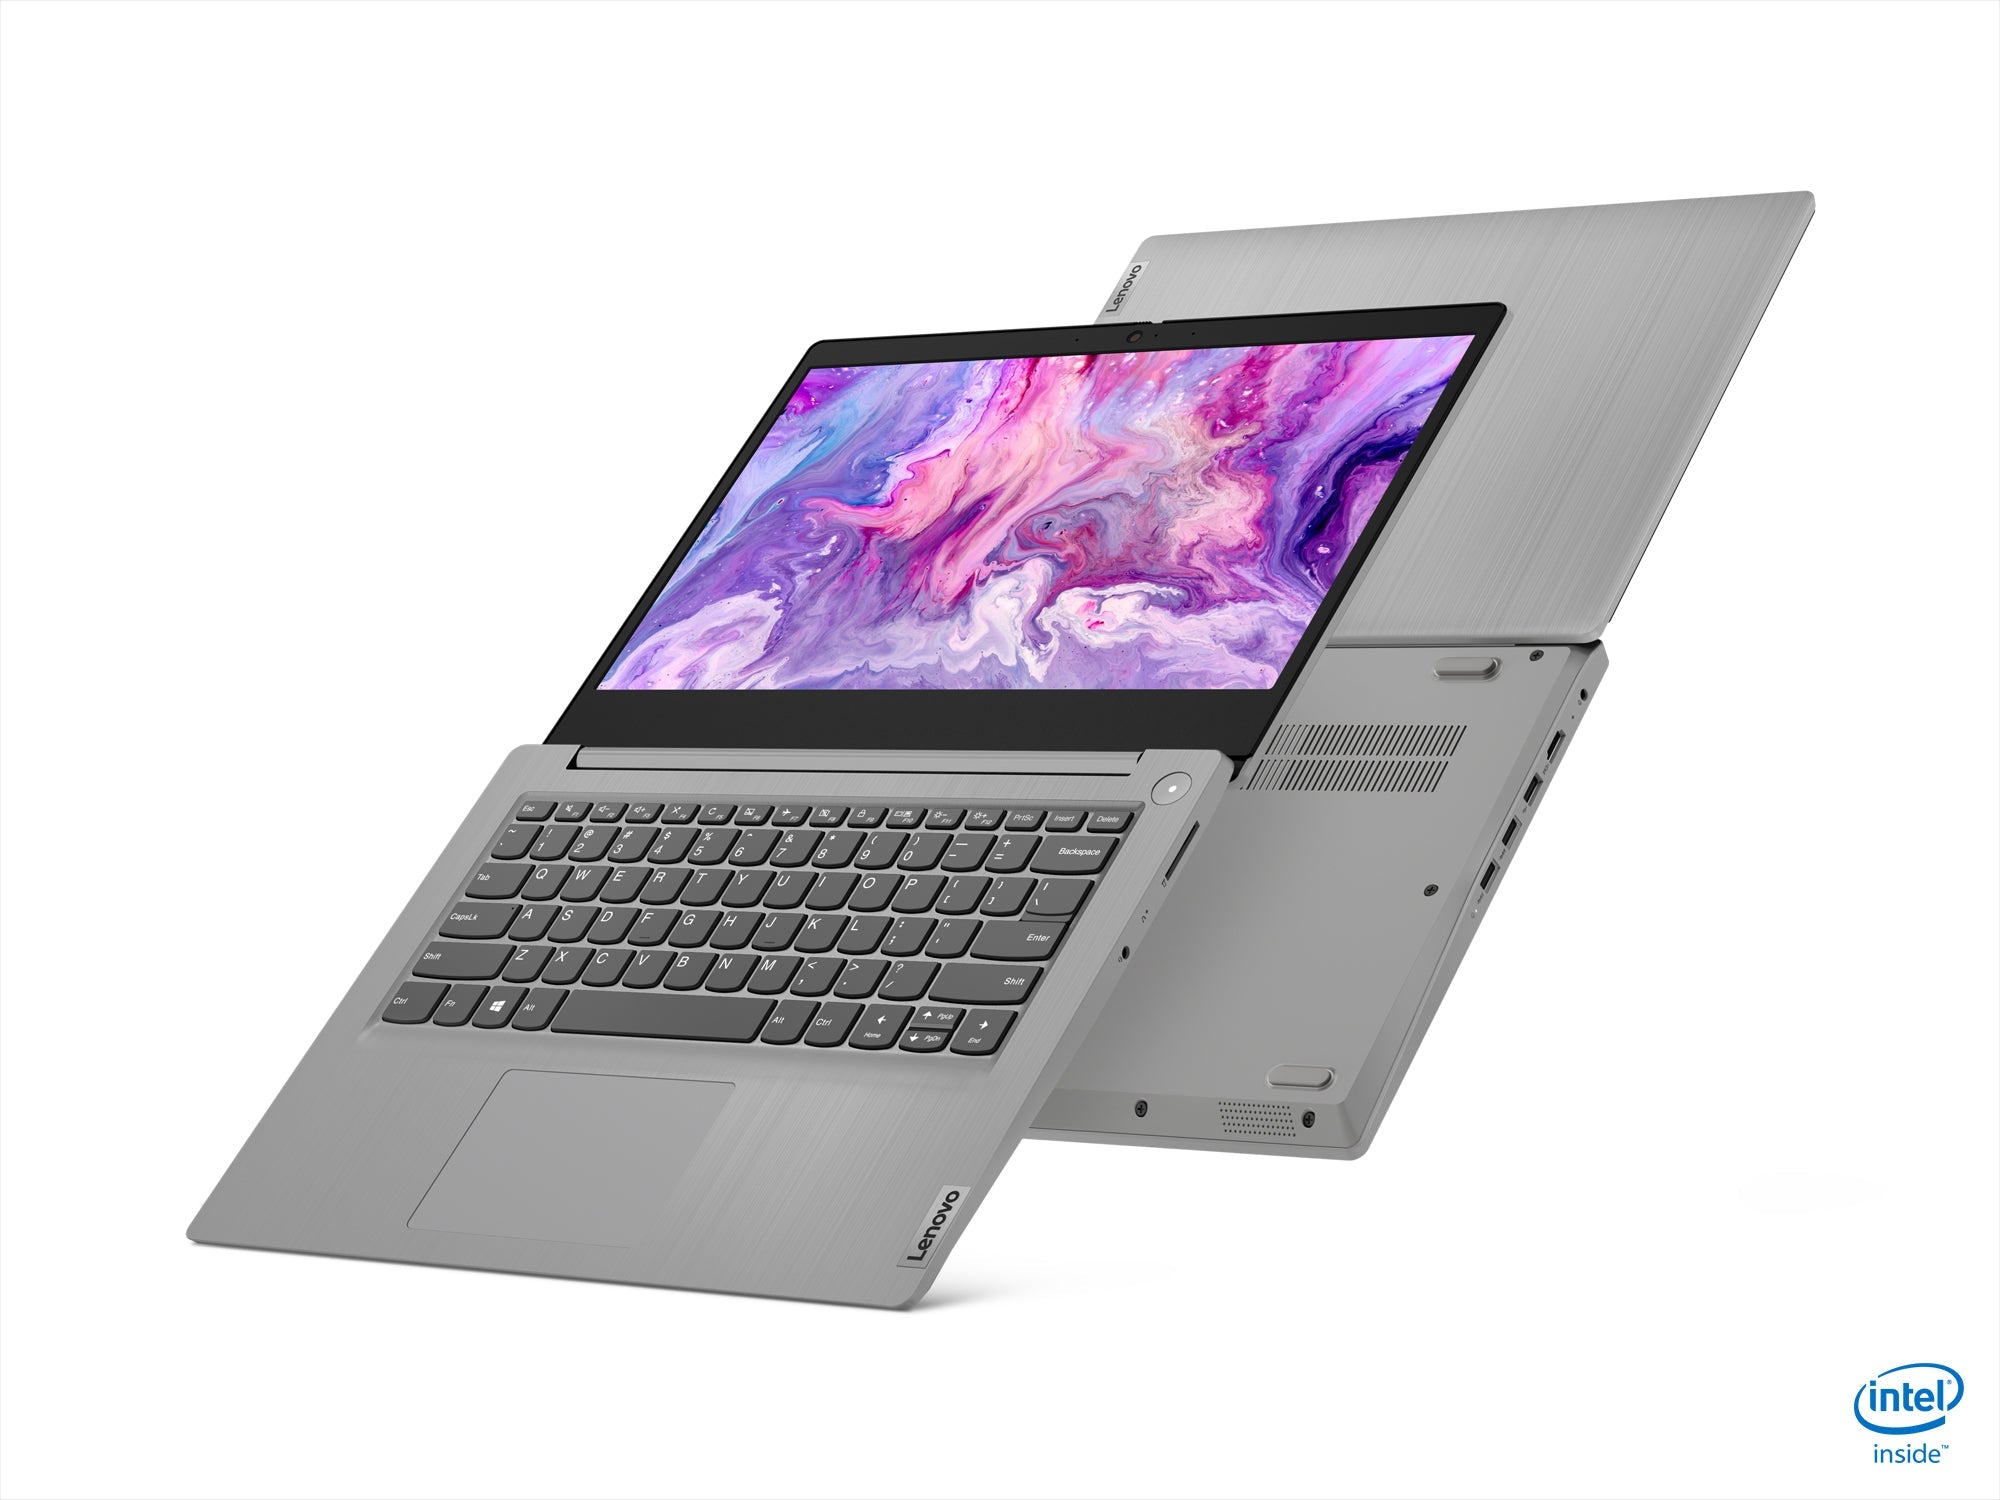 Lenovo IdeaPad 3 14IIL05 8GB 256GB 14" Windows 10 Home Notebook, Platinum Grey (Open Never Used) Lenovo